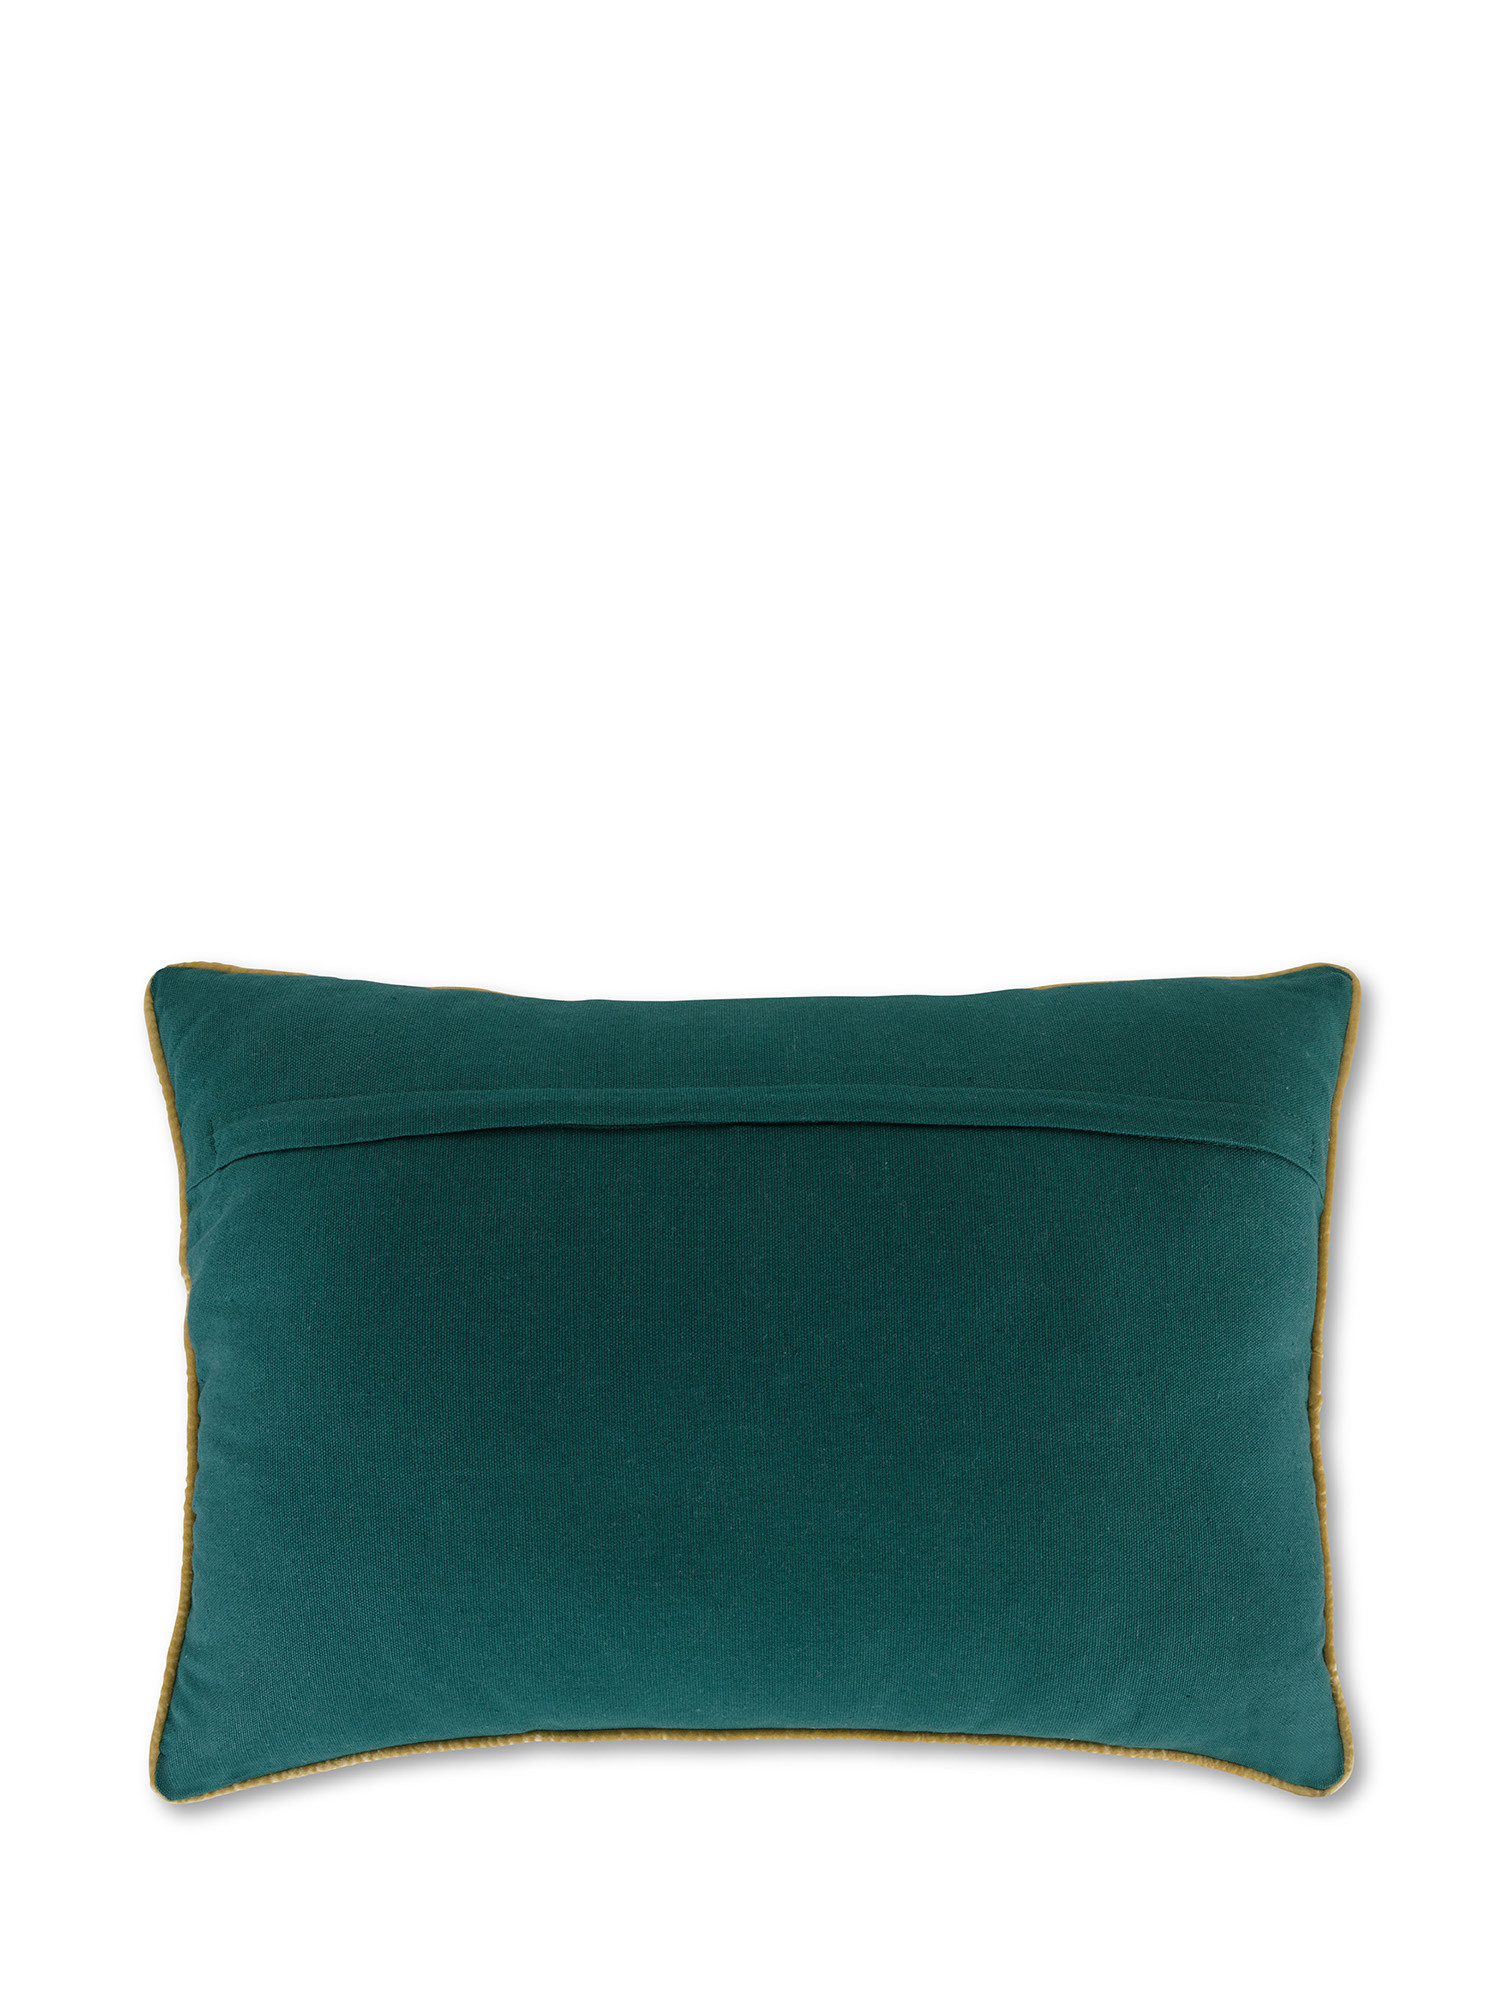 Leopard embroidered velvet cushion 35x50 cm, Green, large image number 1